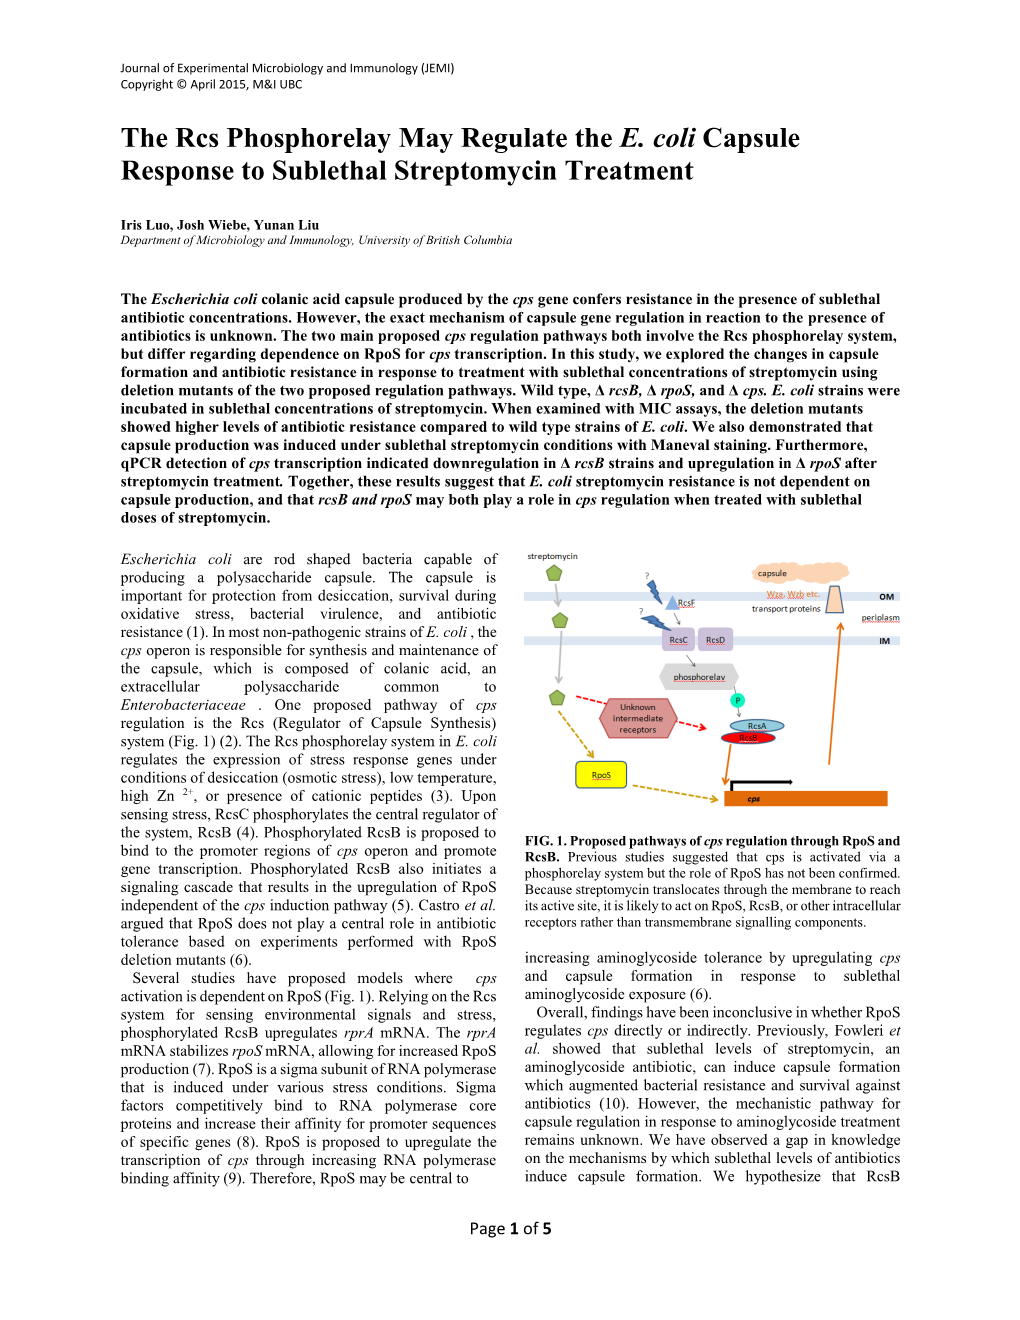 The Rcs Phosphorelay May Regulate the E. Coli Capsule Response to Sublethal Streptomycin Treatment